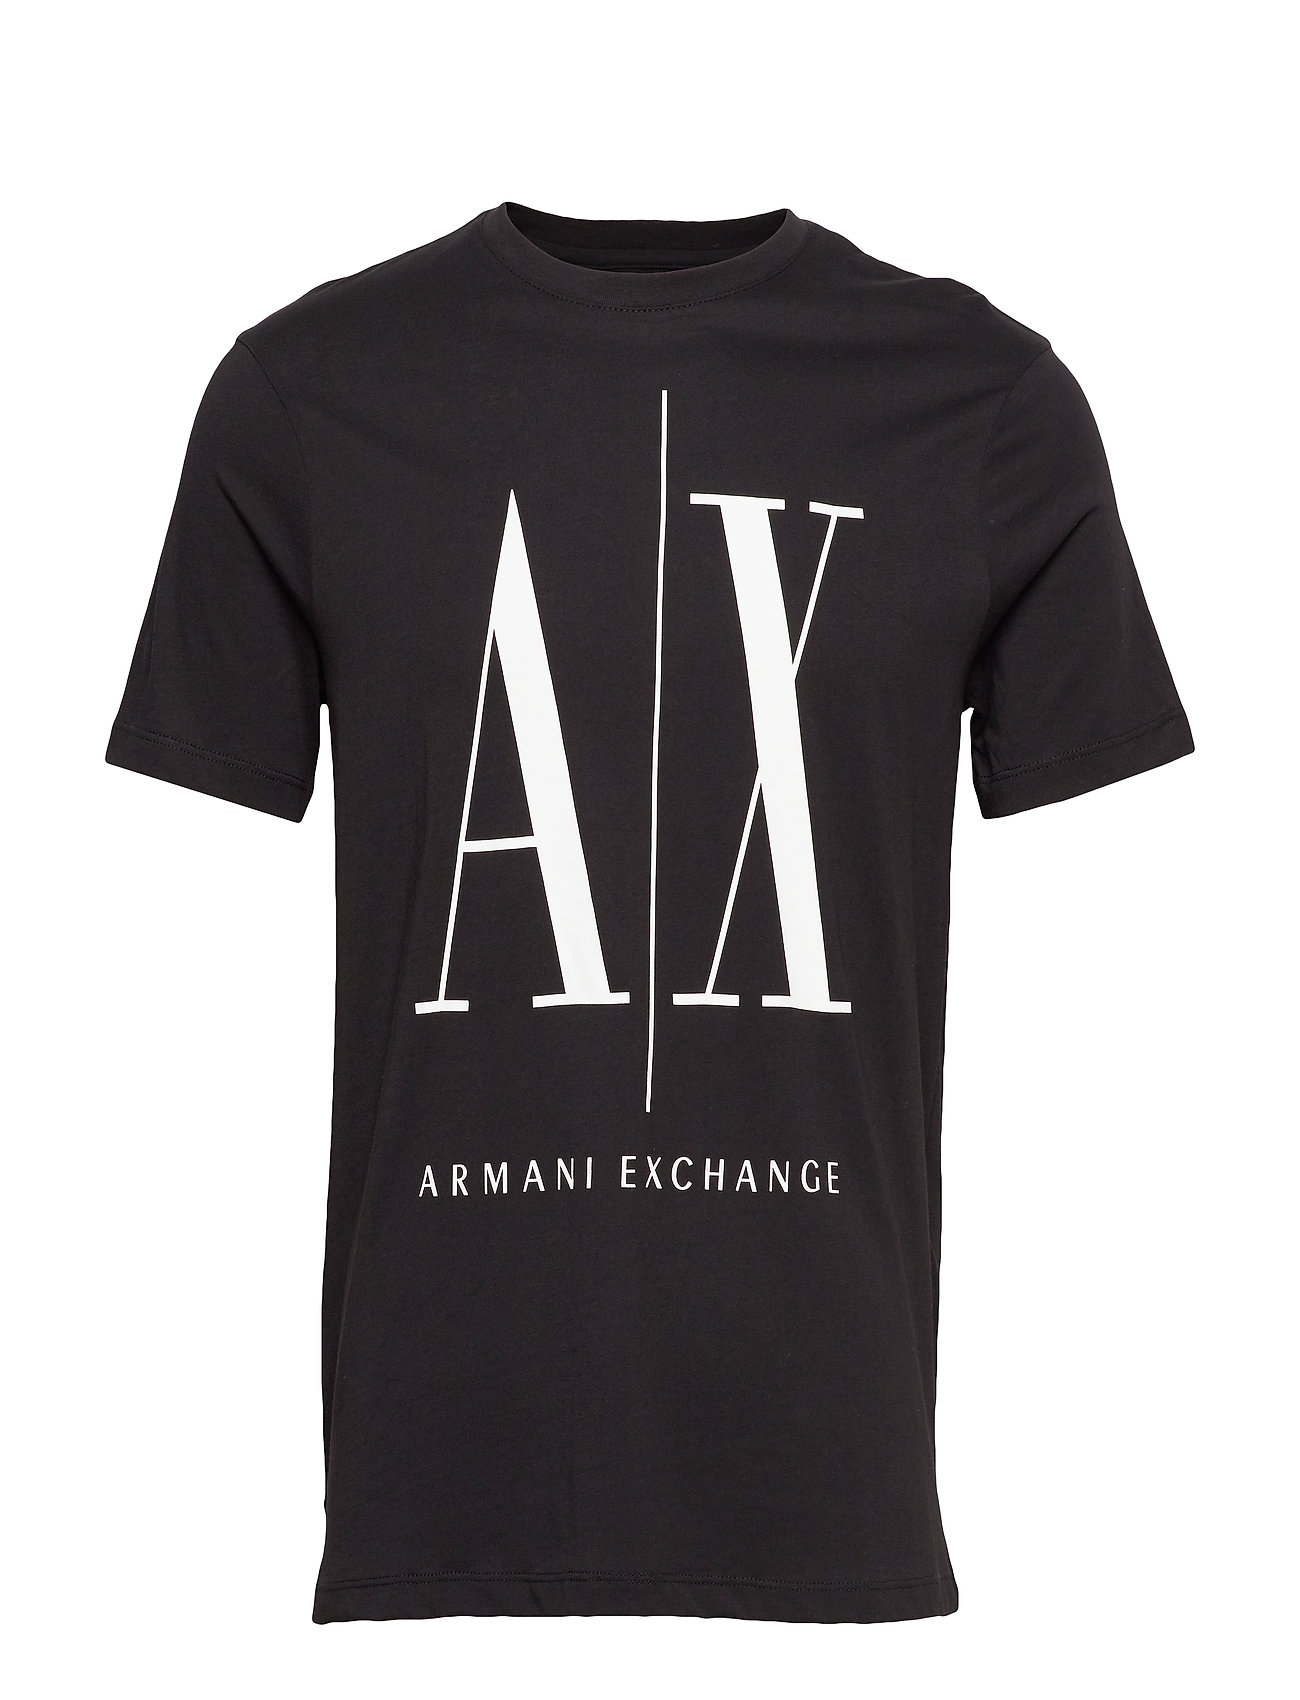 armani exchange black shirt